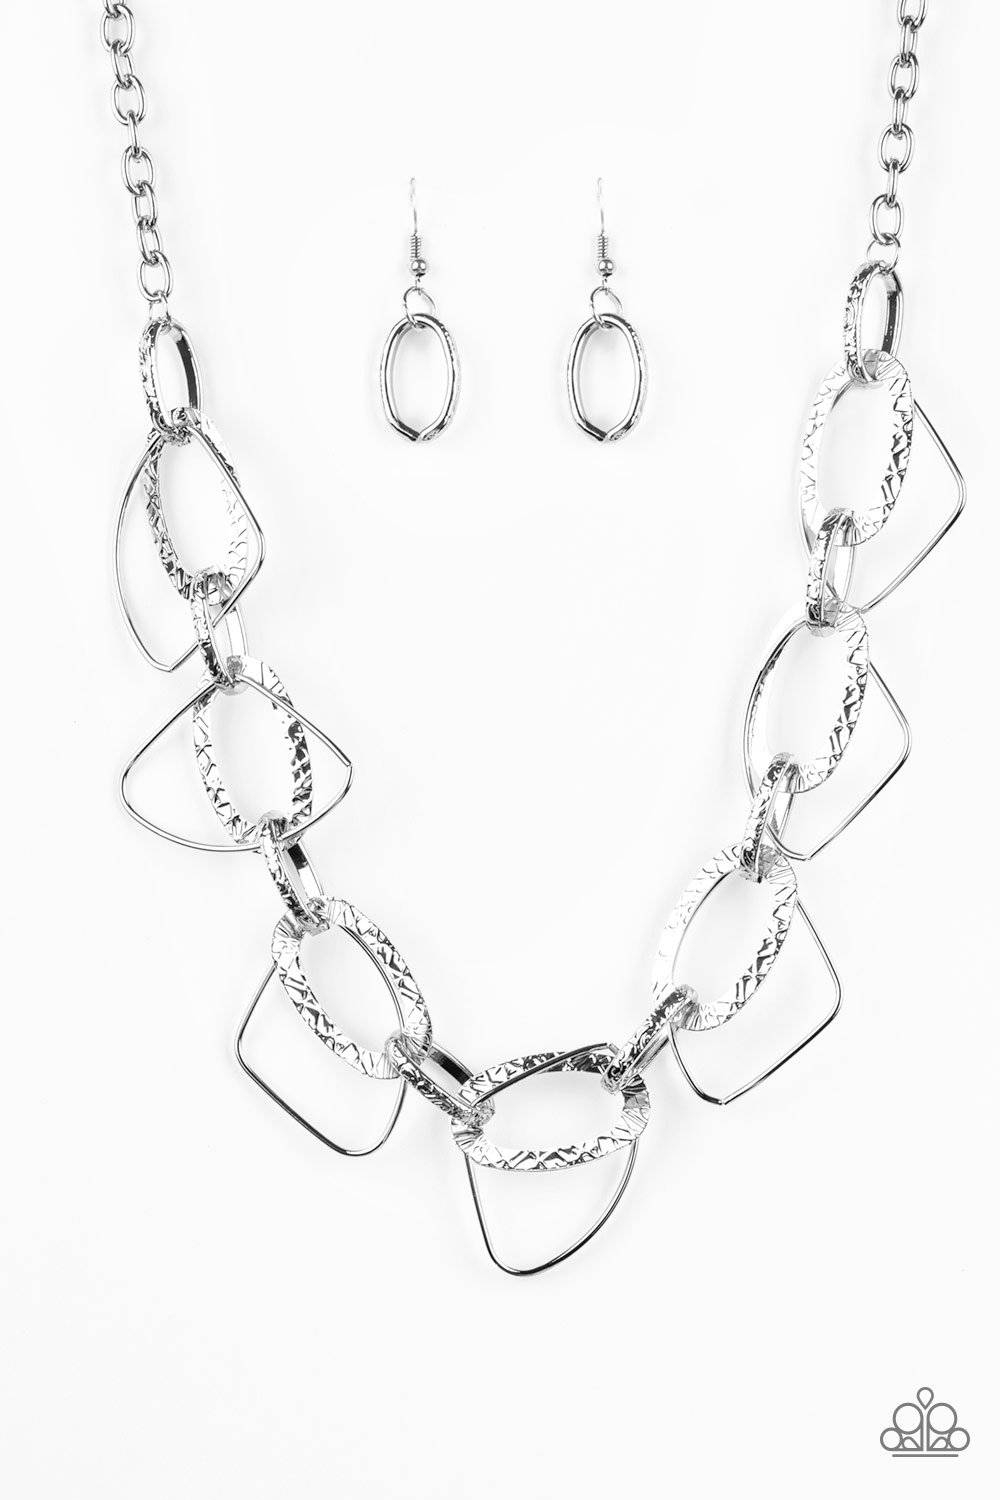 Very Avant-Garde - Silver Necklace - Paparazzi Accessories - GlaMarous Titi Jewels